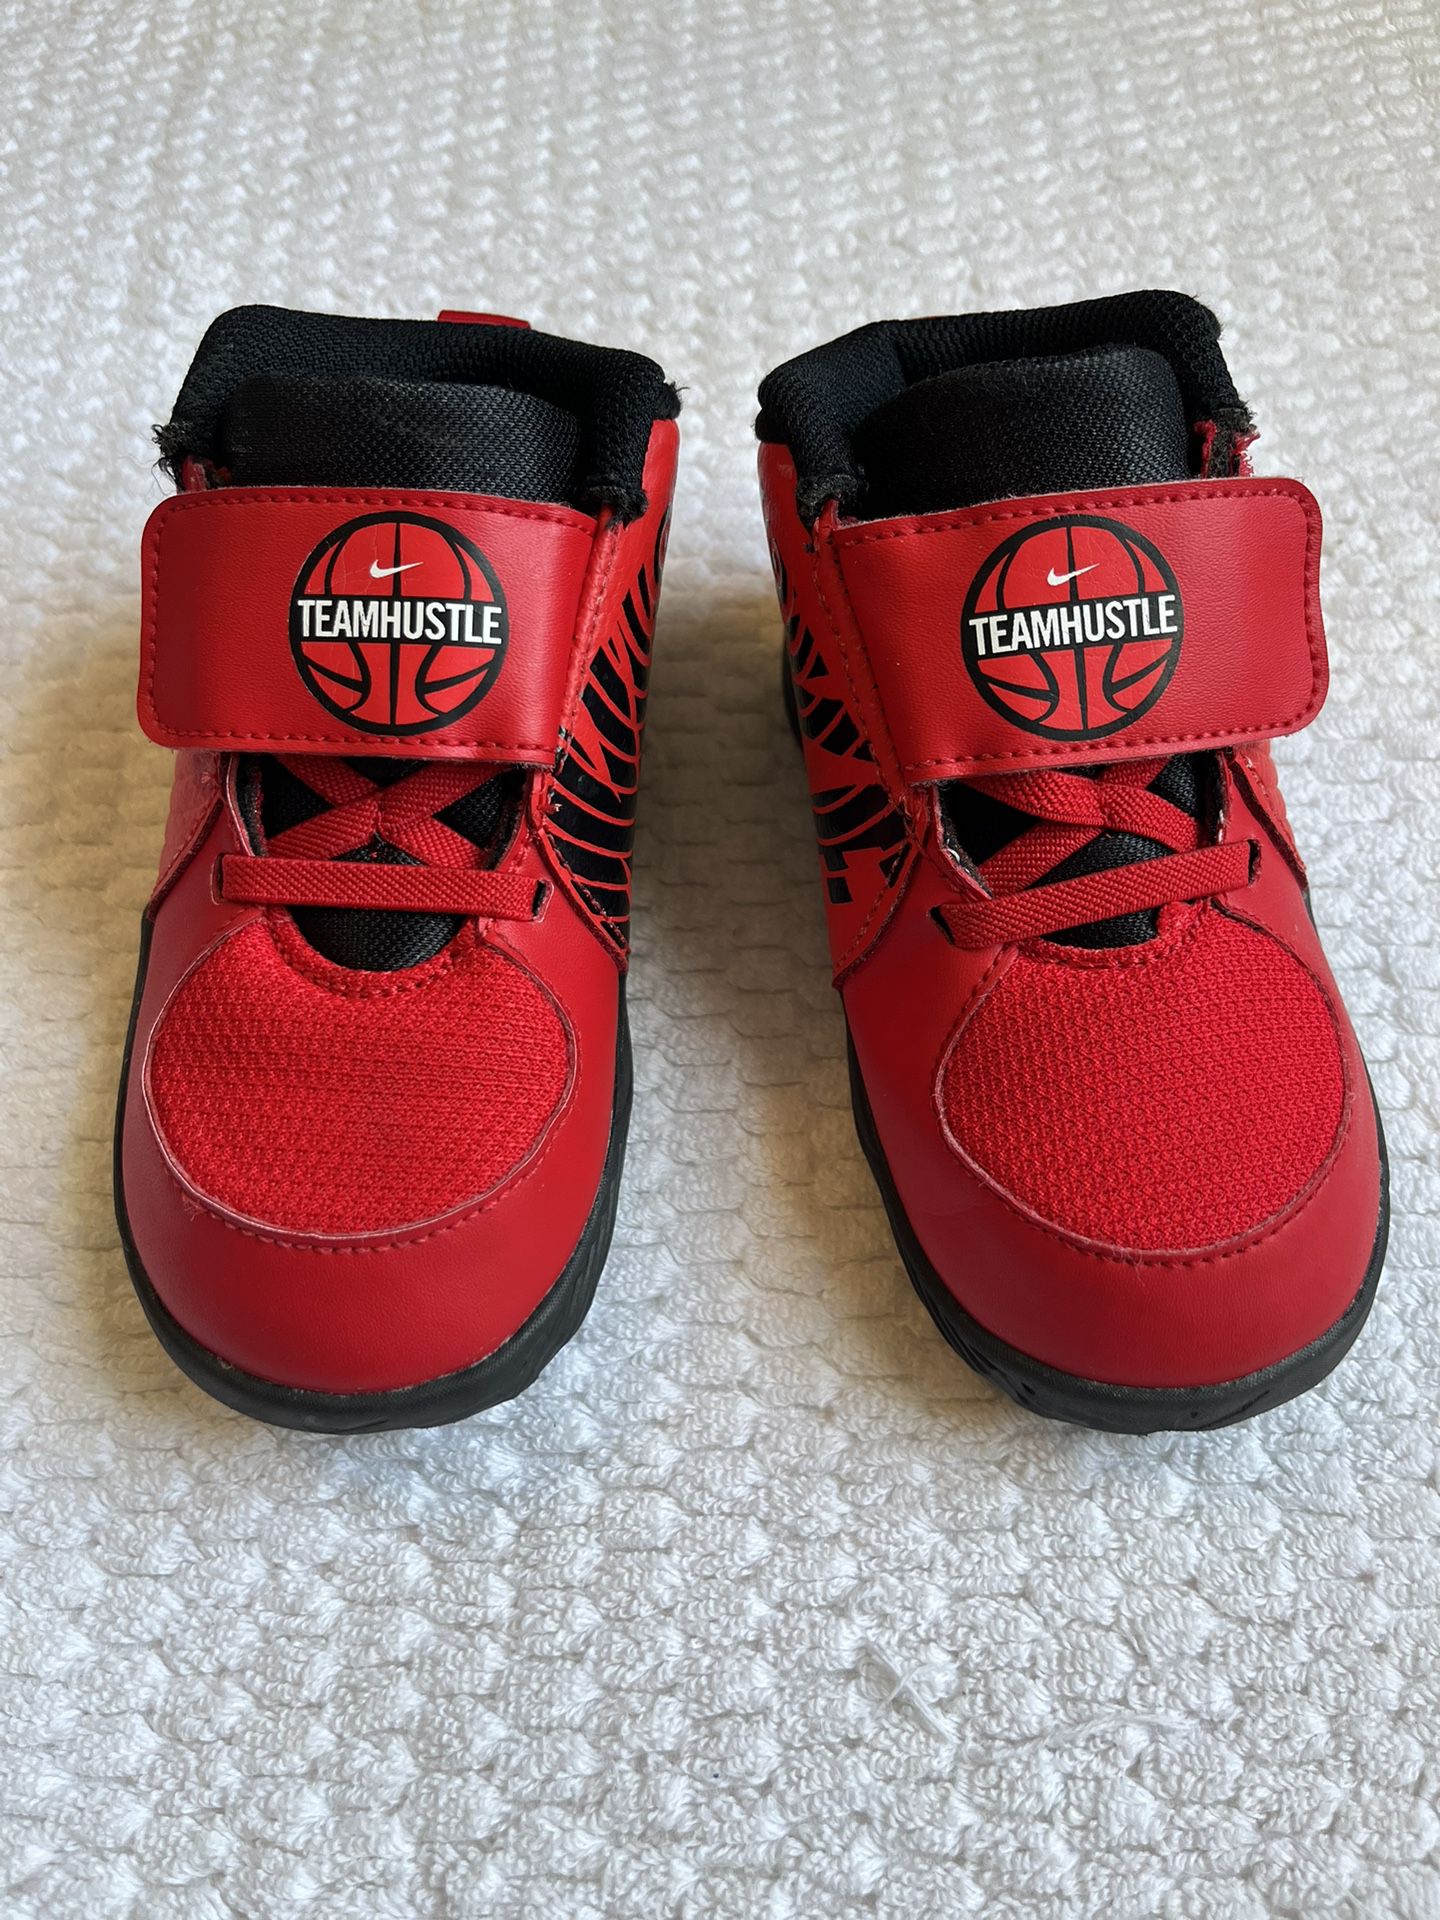 Nike Boys TEAM HUSTLE D Toddlers University Red/Black-White AQ4226 Shoes Size 8C